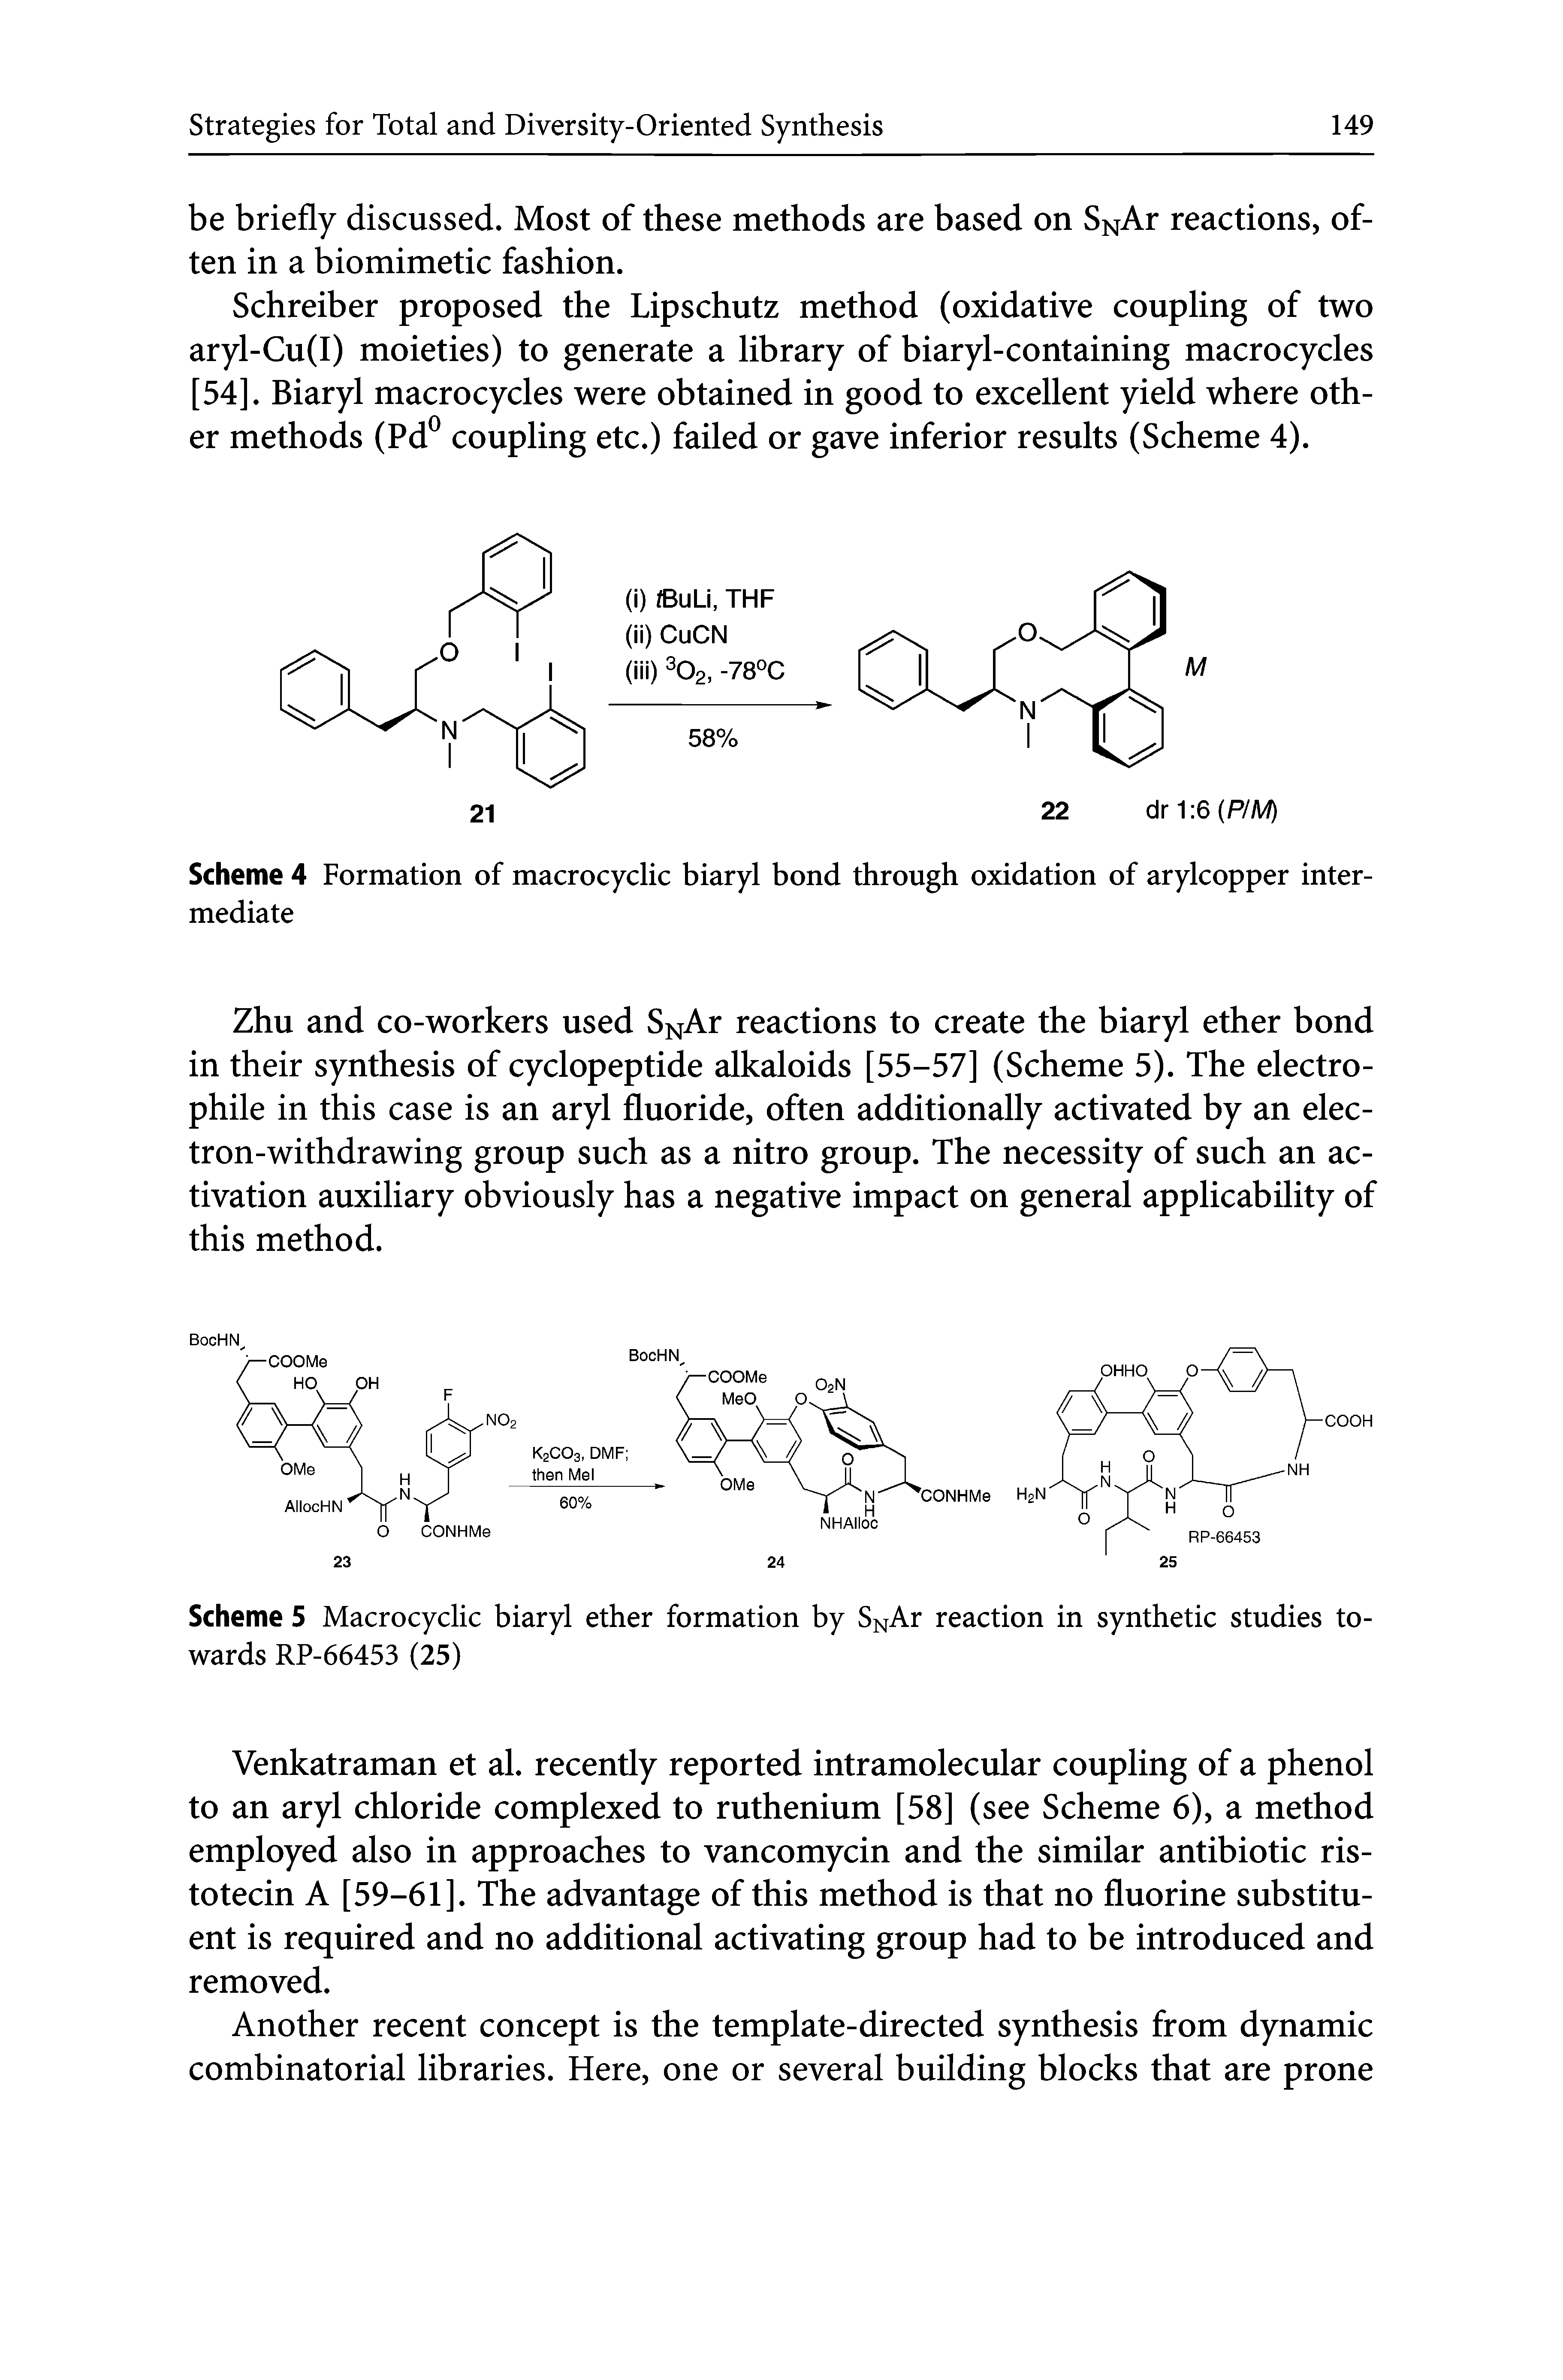 Scheme 4 Formation of macrocyclic biaryl bond through oxidation of arylcopper intermediate...